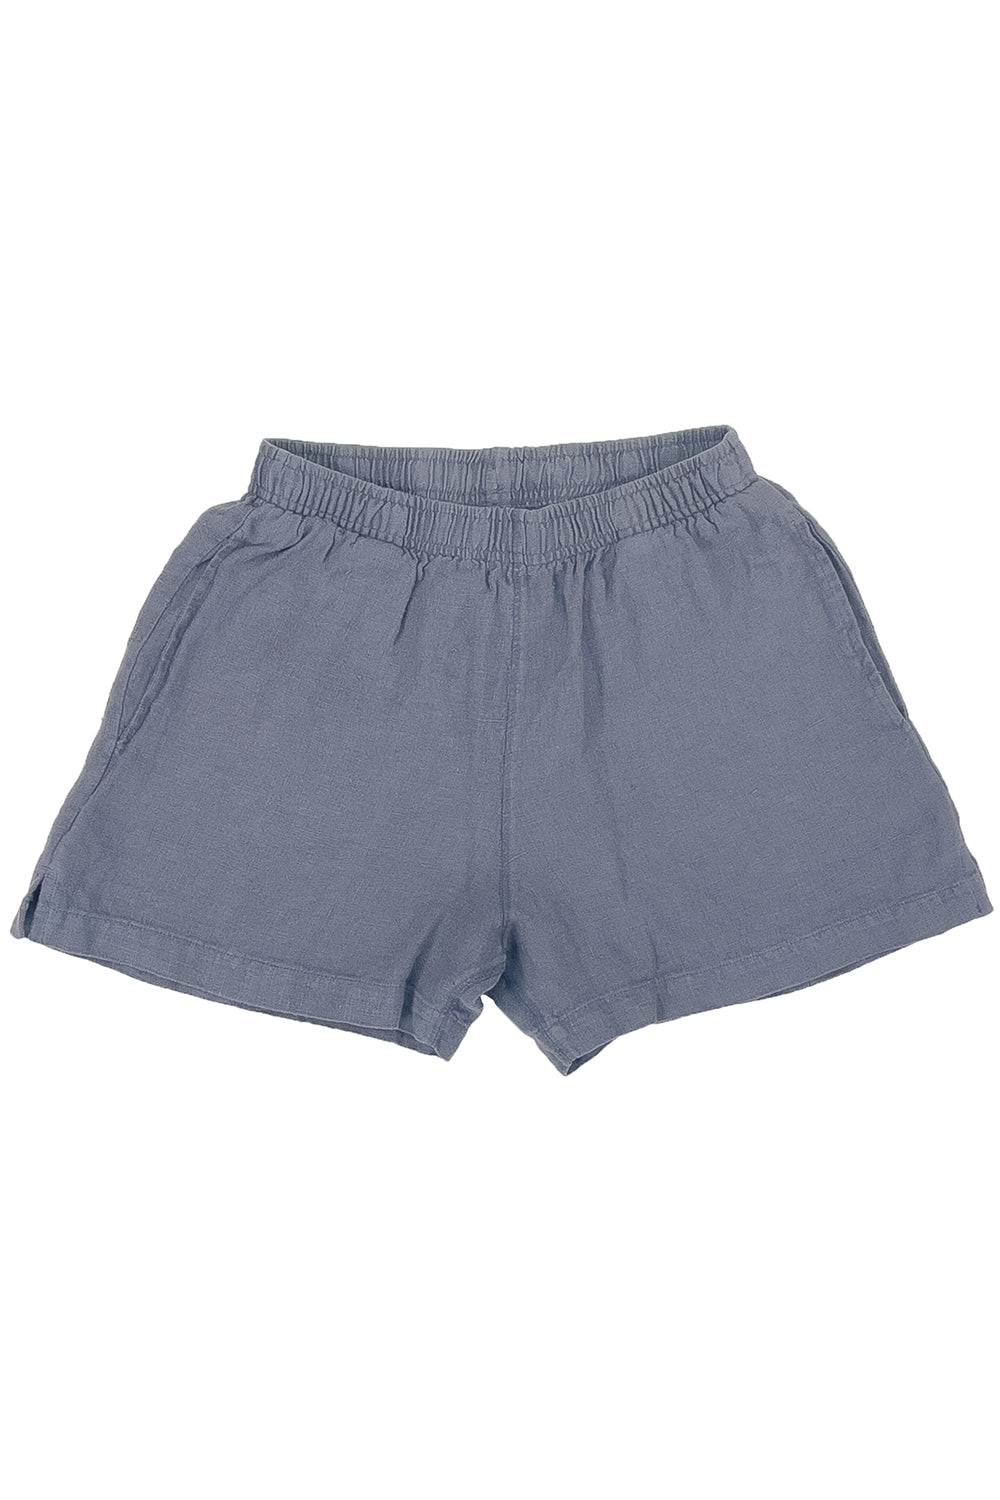 Makena 100% Hemp Short | Jungmaven Hemp Clothing & Accessories / Color: Diesel Gray